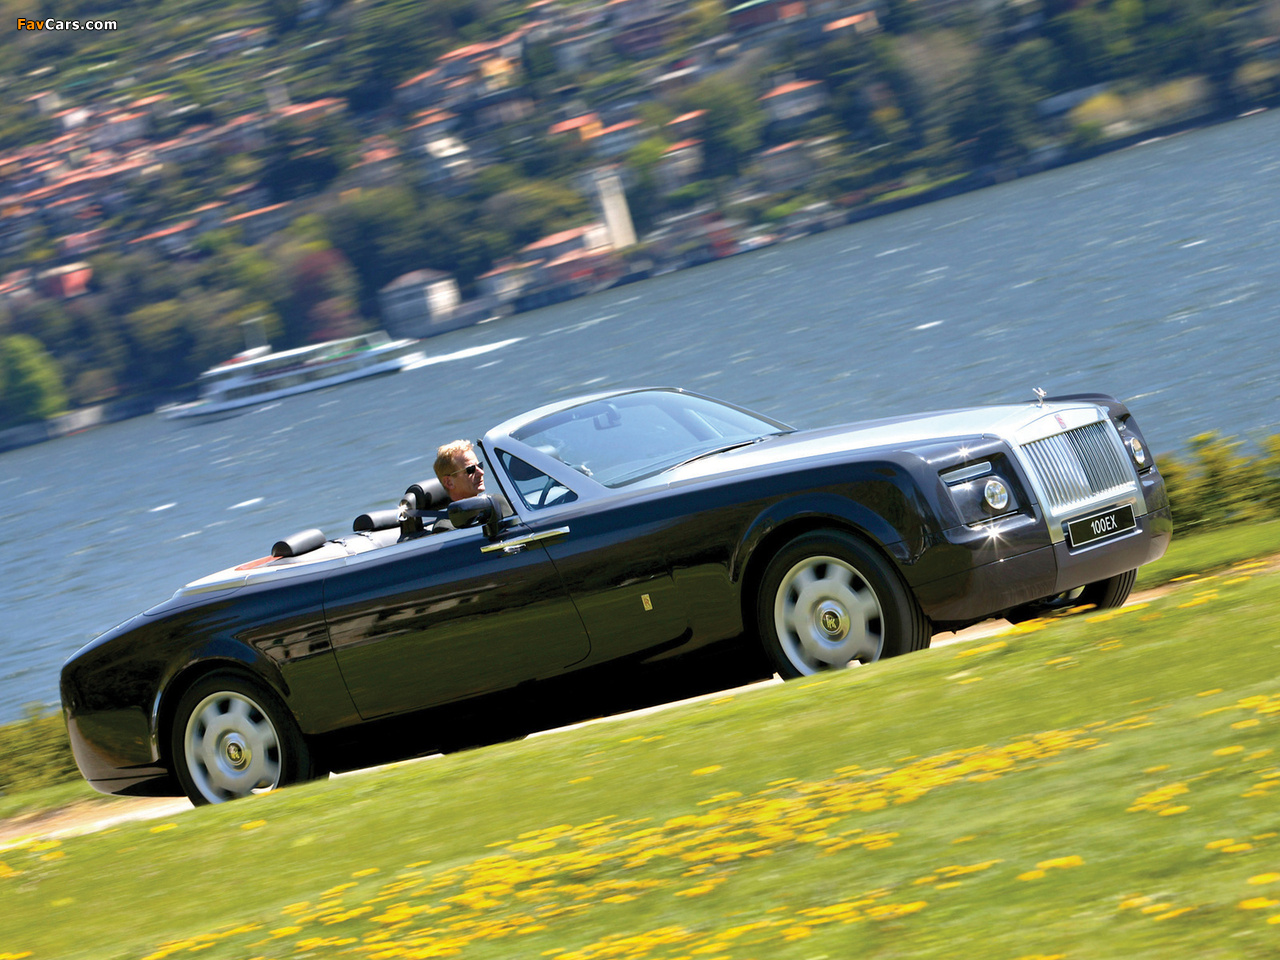 Images of Rolls-Royce 101EX Concept 2006 (1280 x 960)